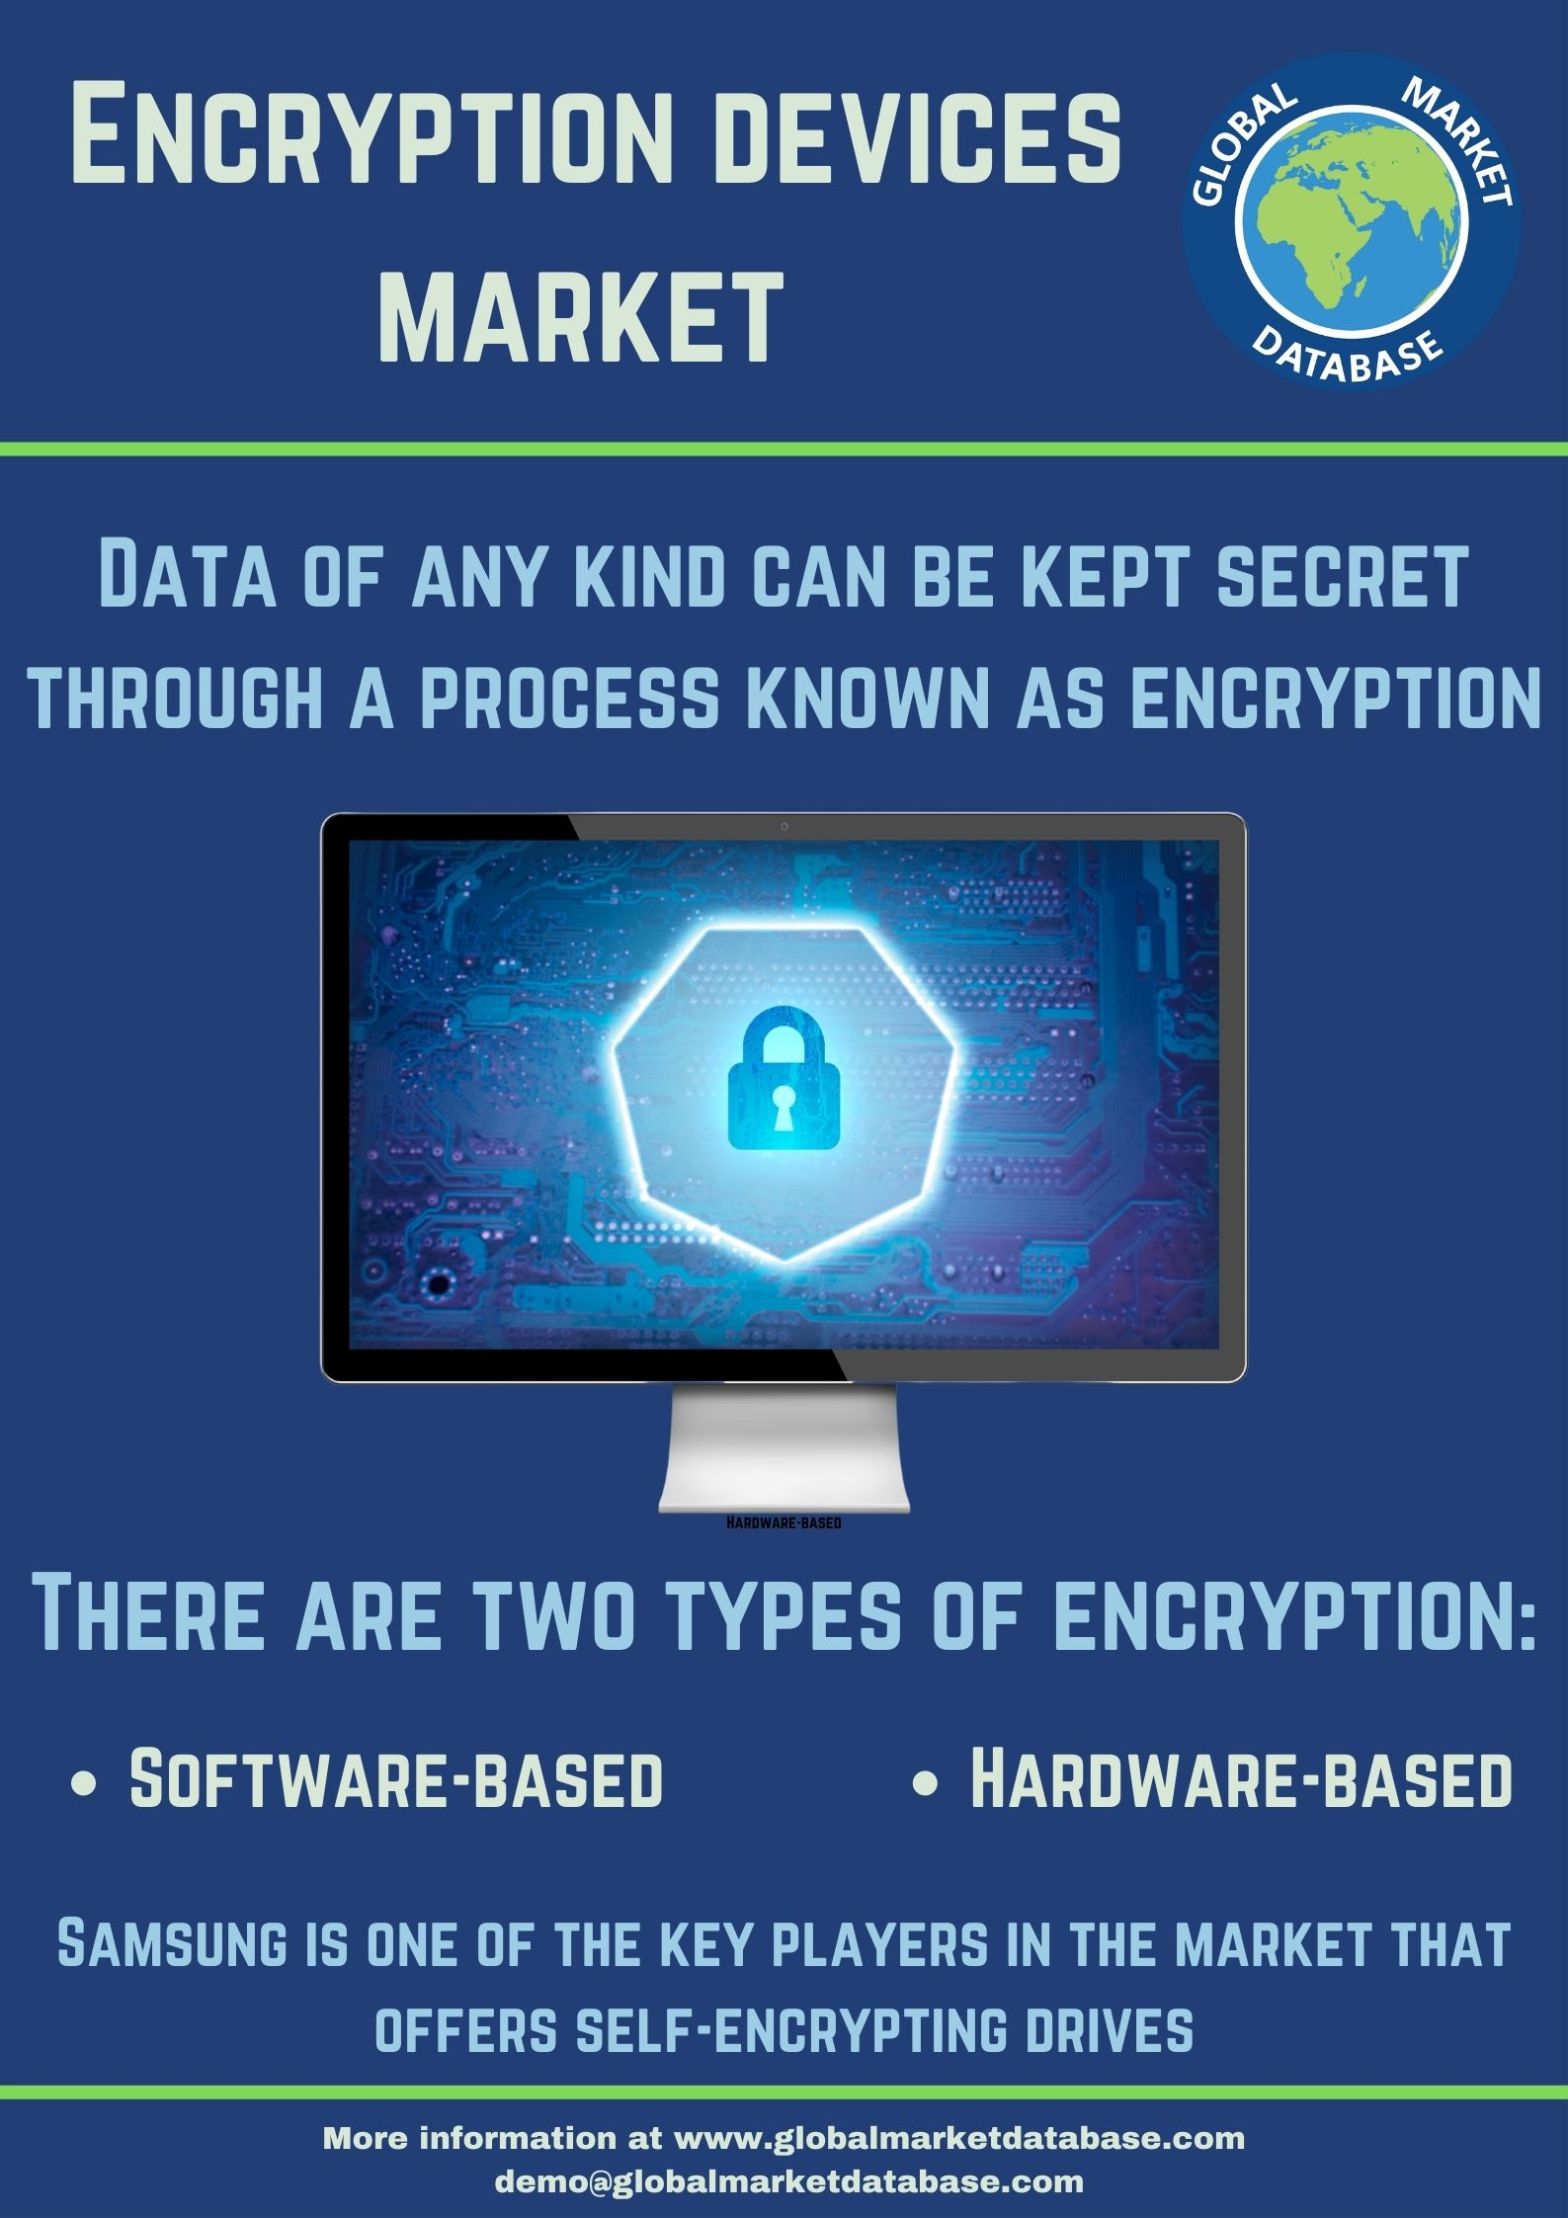 Encryption devices market